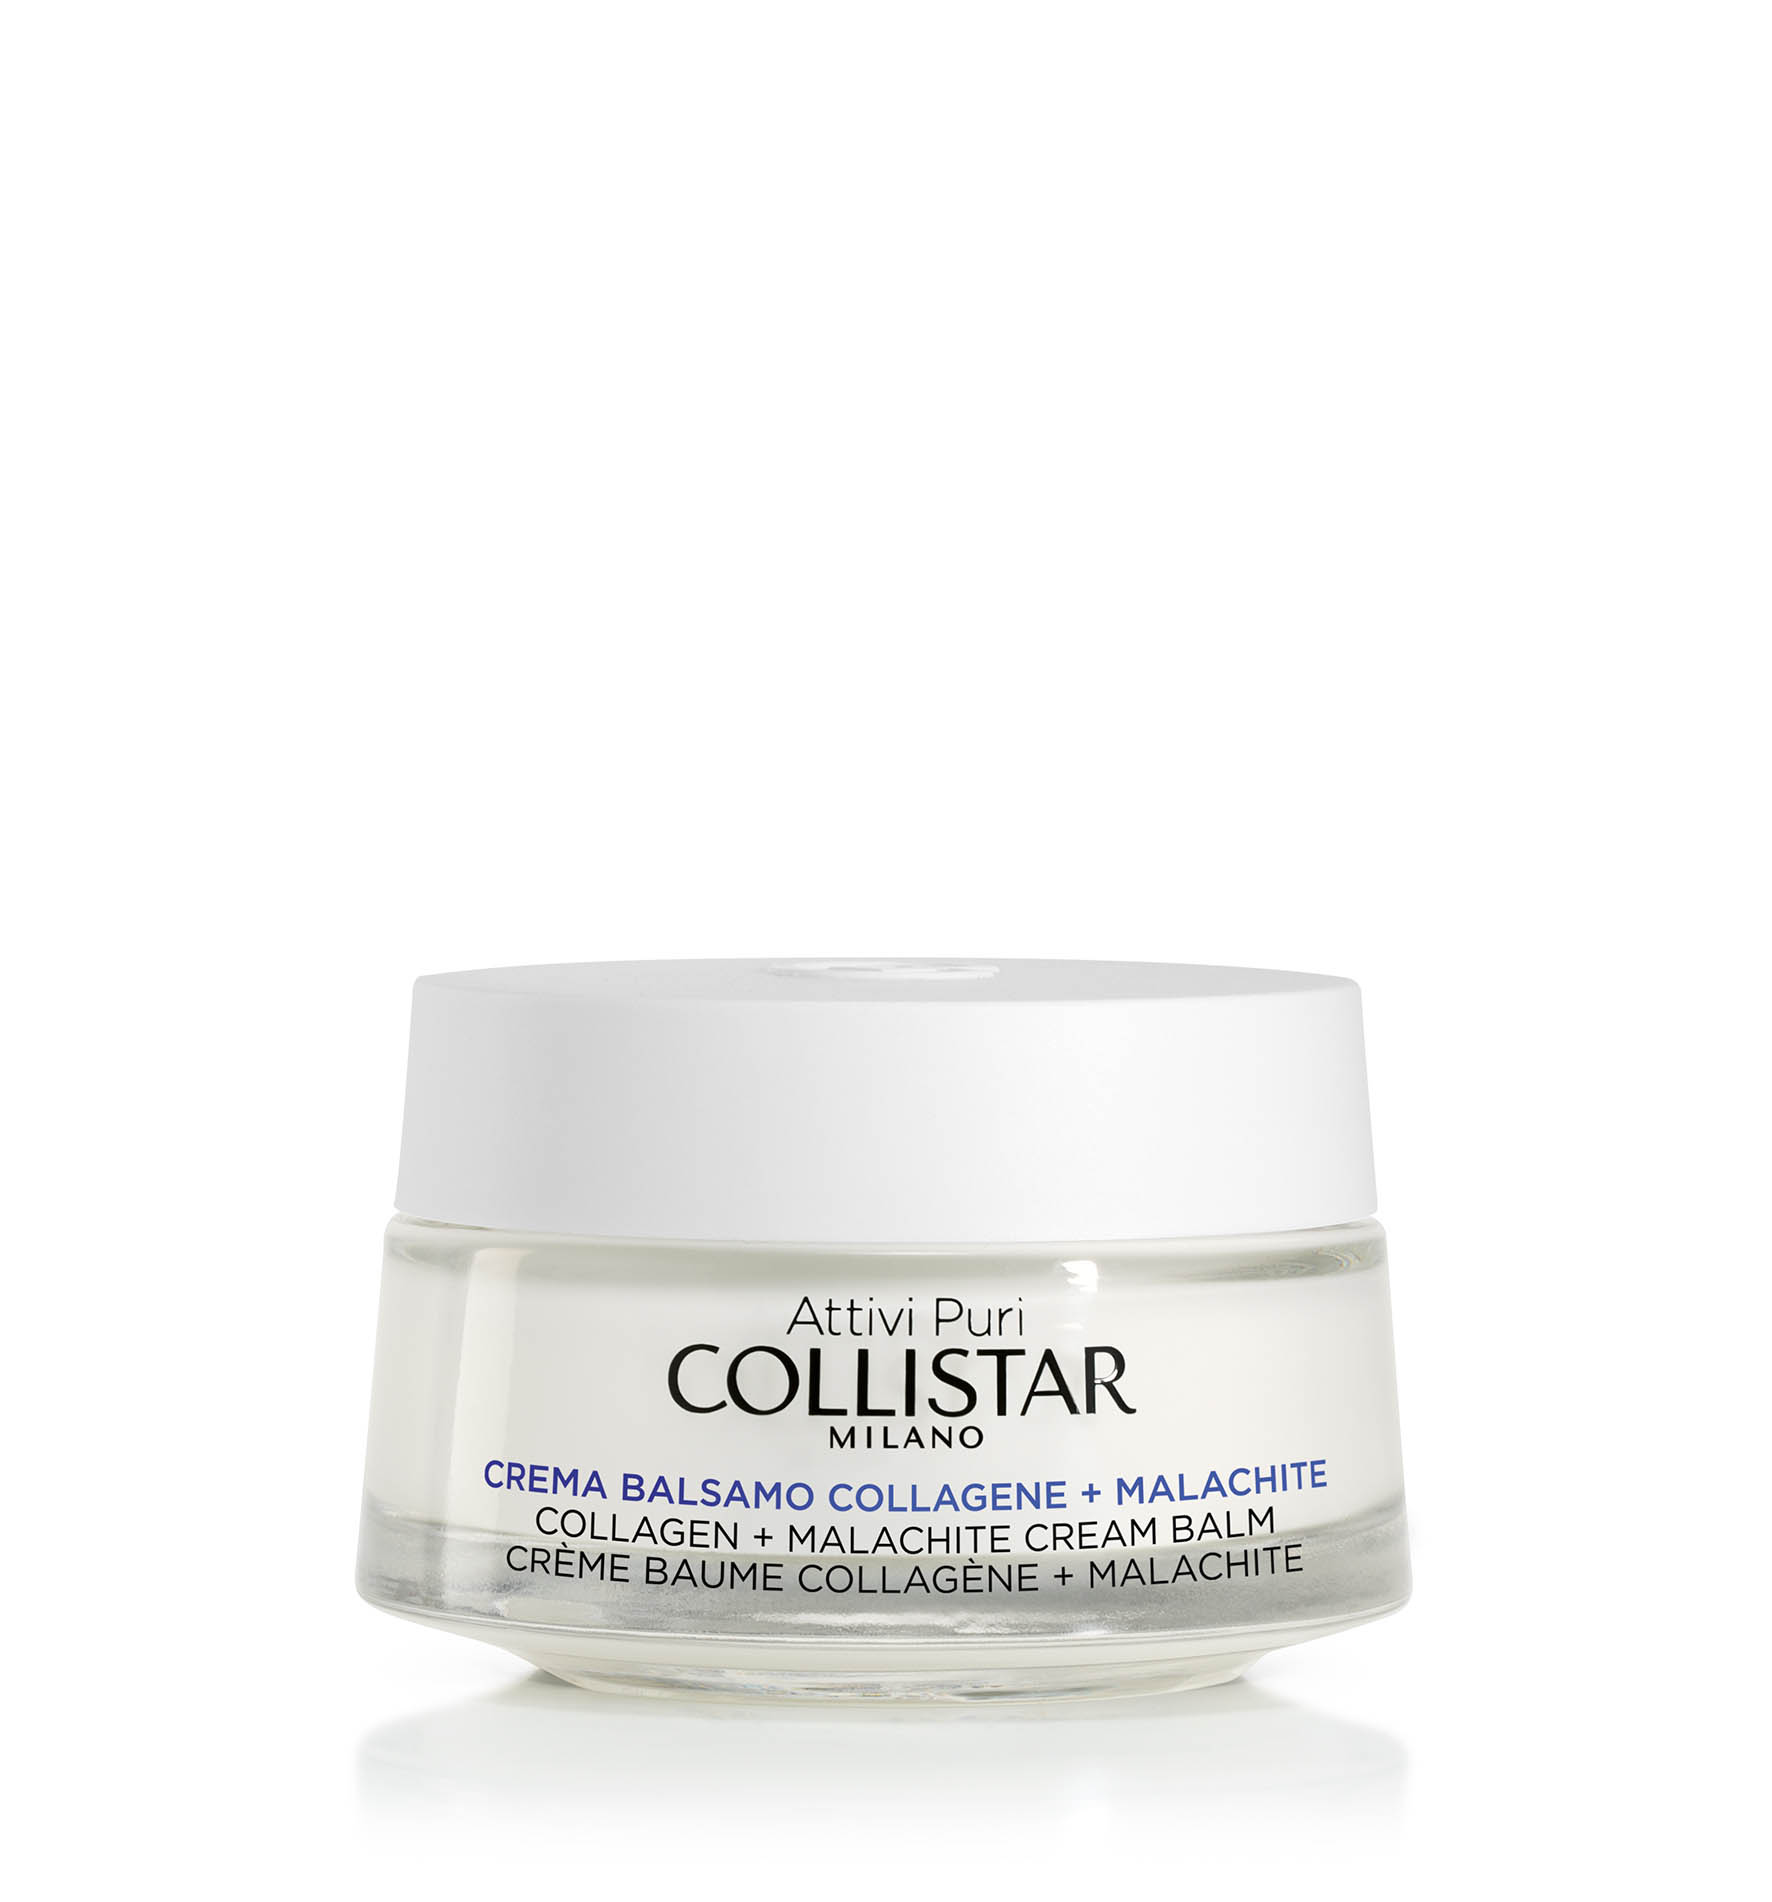 COLLAGEN + MALACHITE CREAM BALM - Face creams  | Collistar - Shop Online Ufficiale